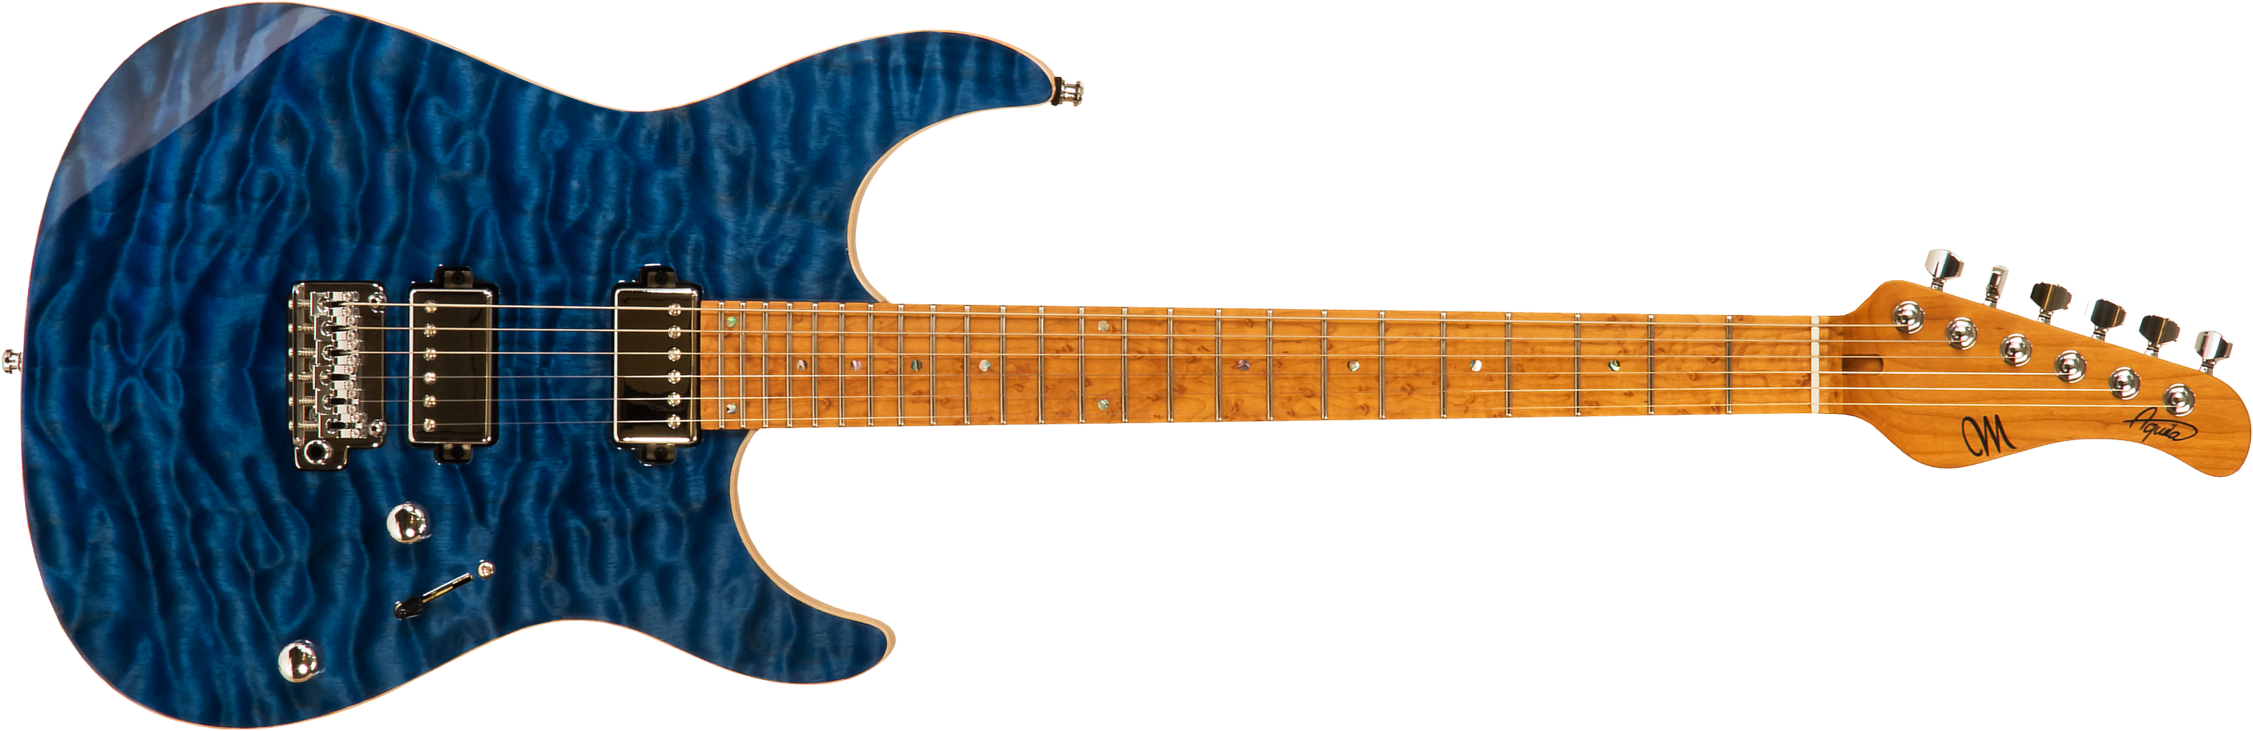 Mayones Guitars Aquila Elite S 6 40th Anniversary 2h Trem Mn #aq2204194 - Trans Blue Gloss - Str shape electric guitar - Main picture